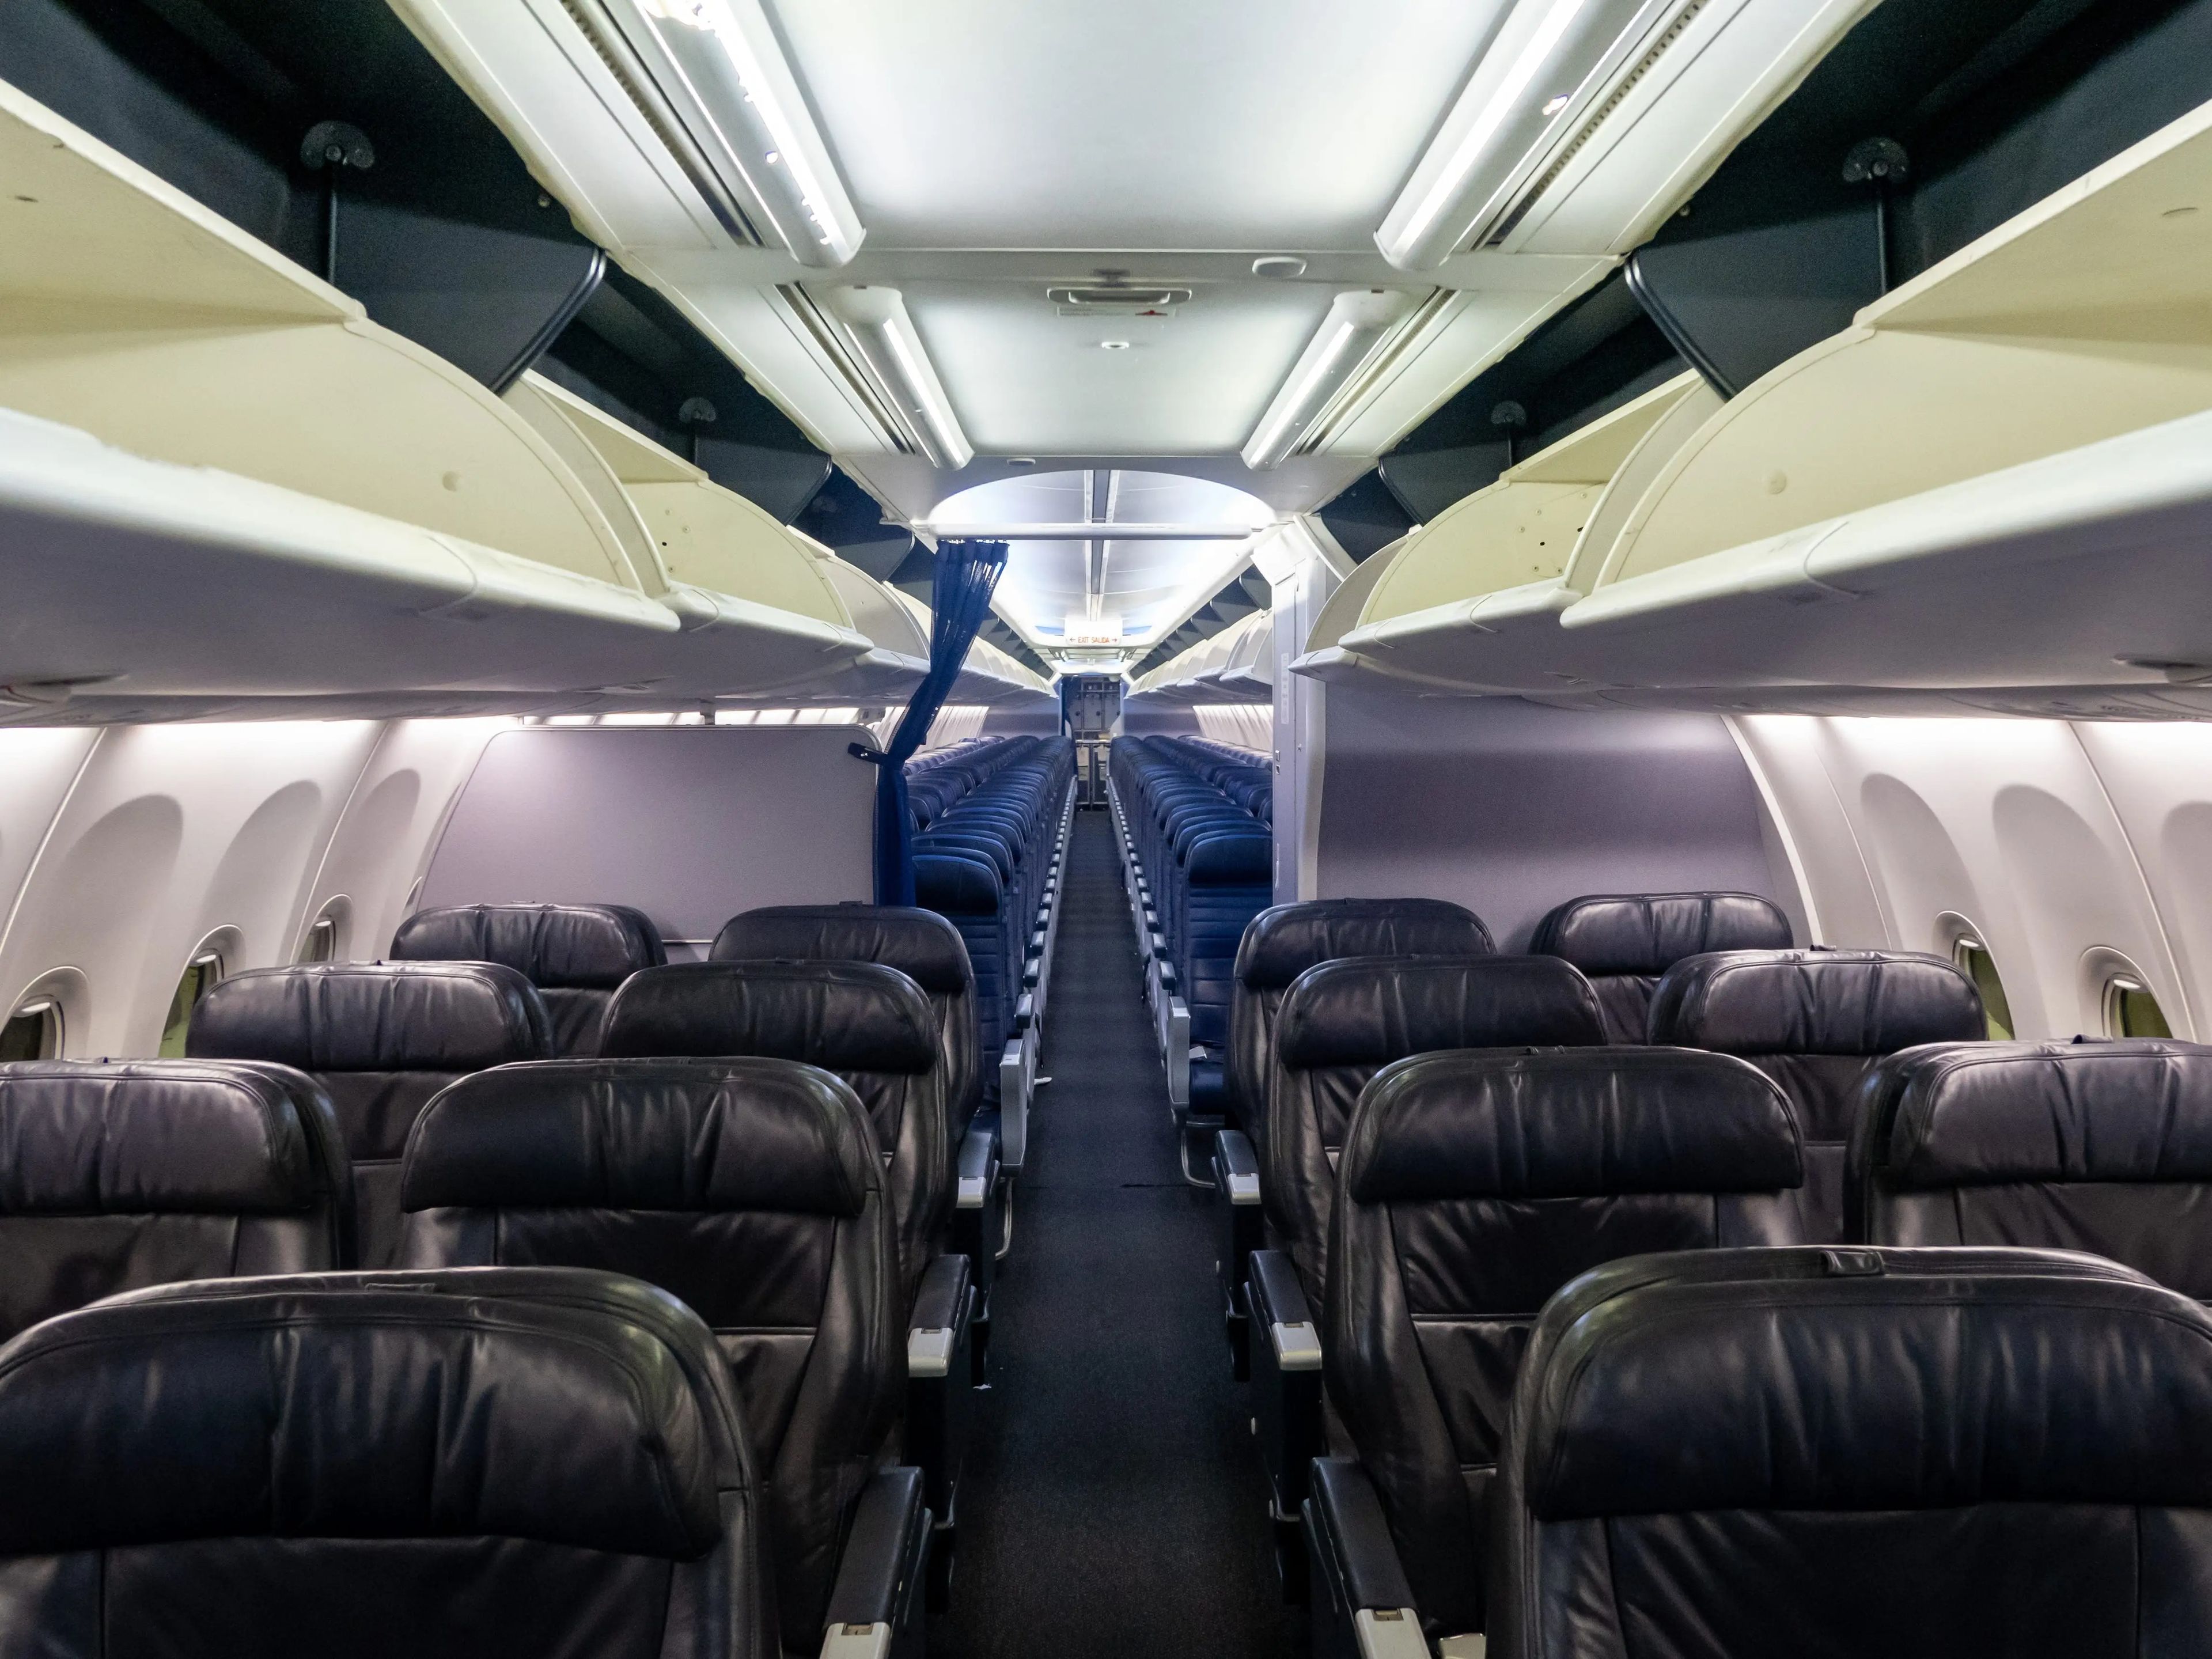 bulkhead seats on plane